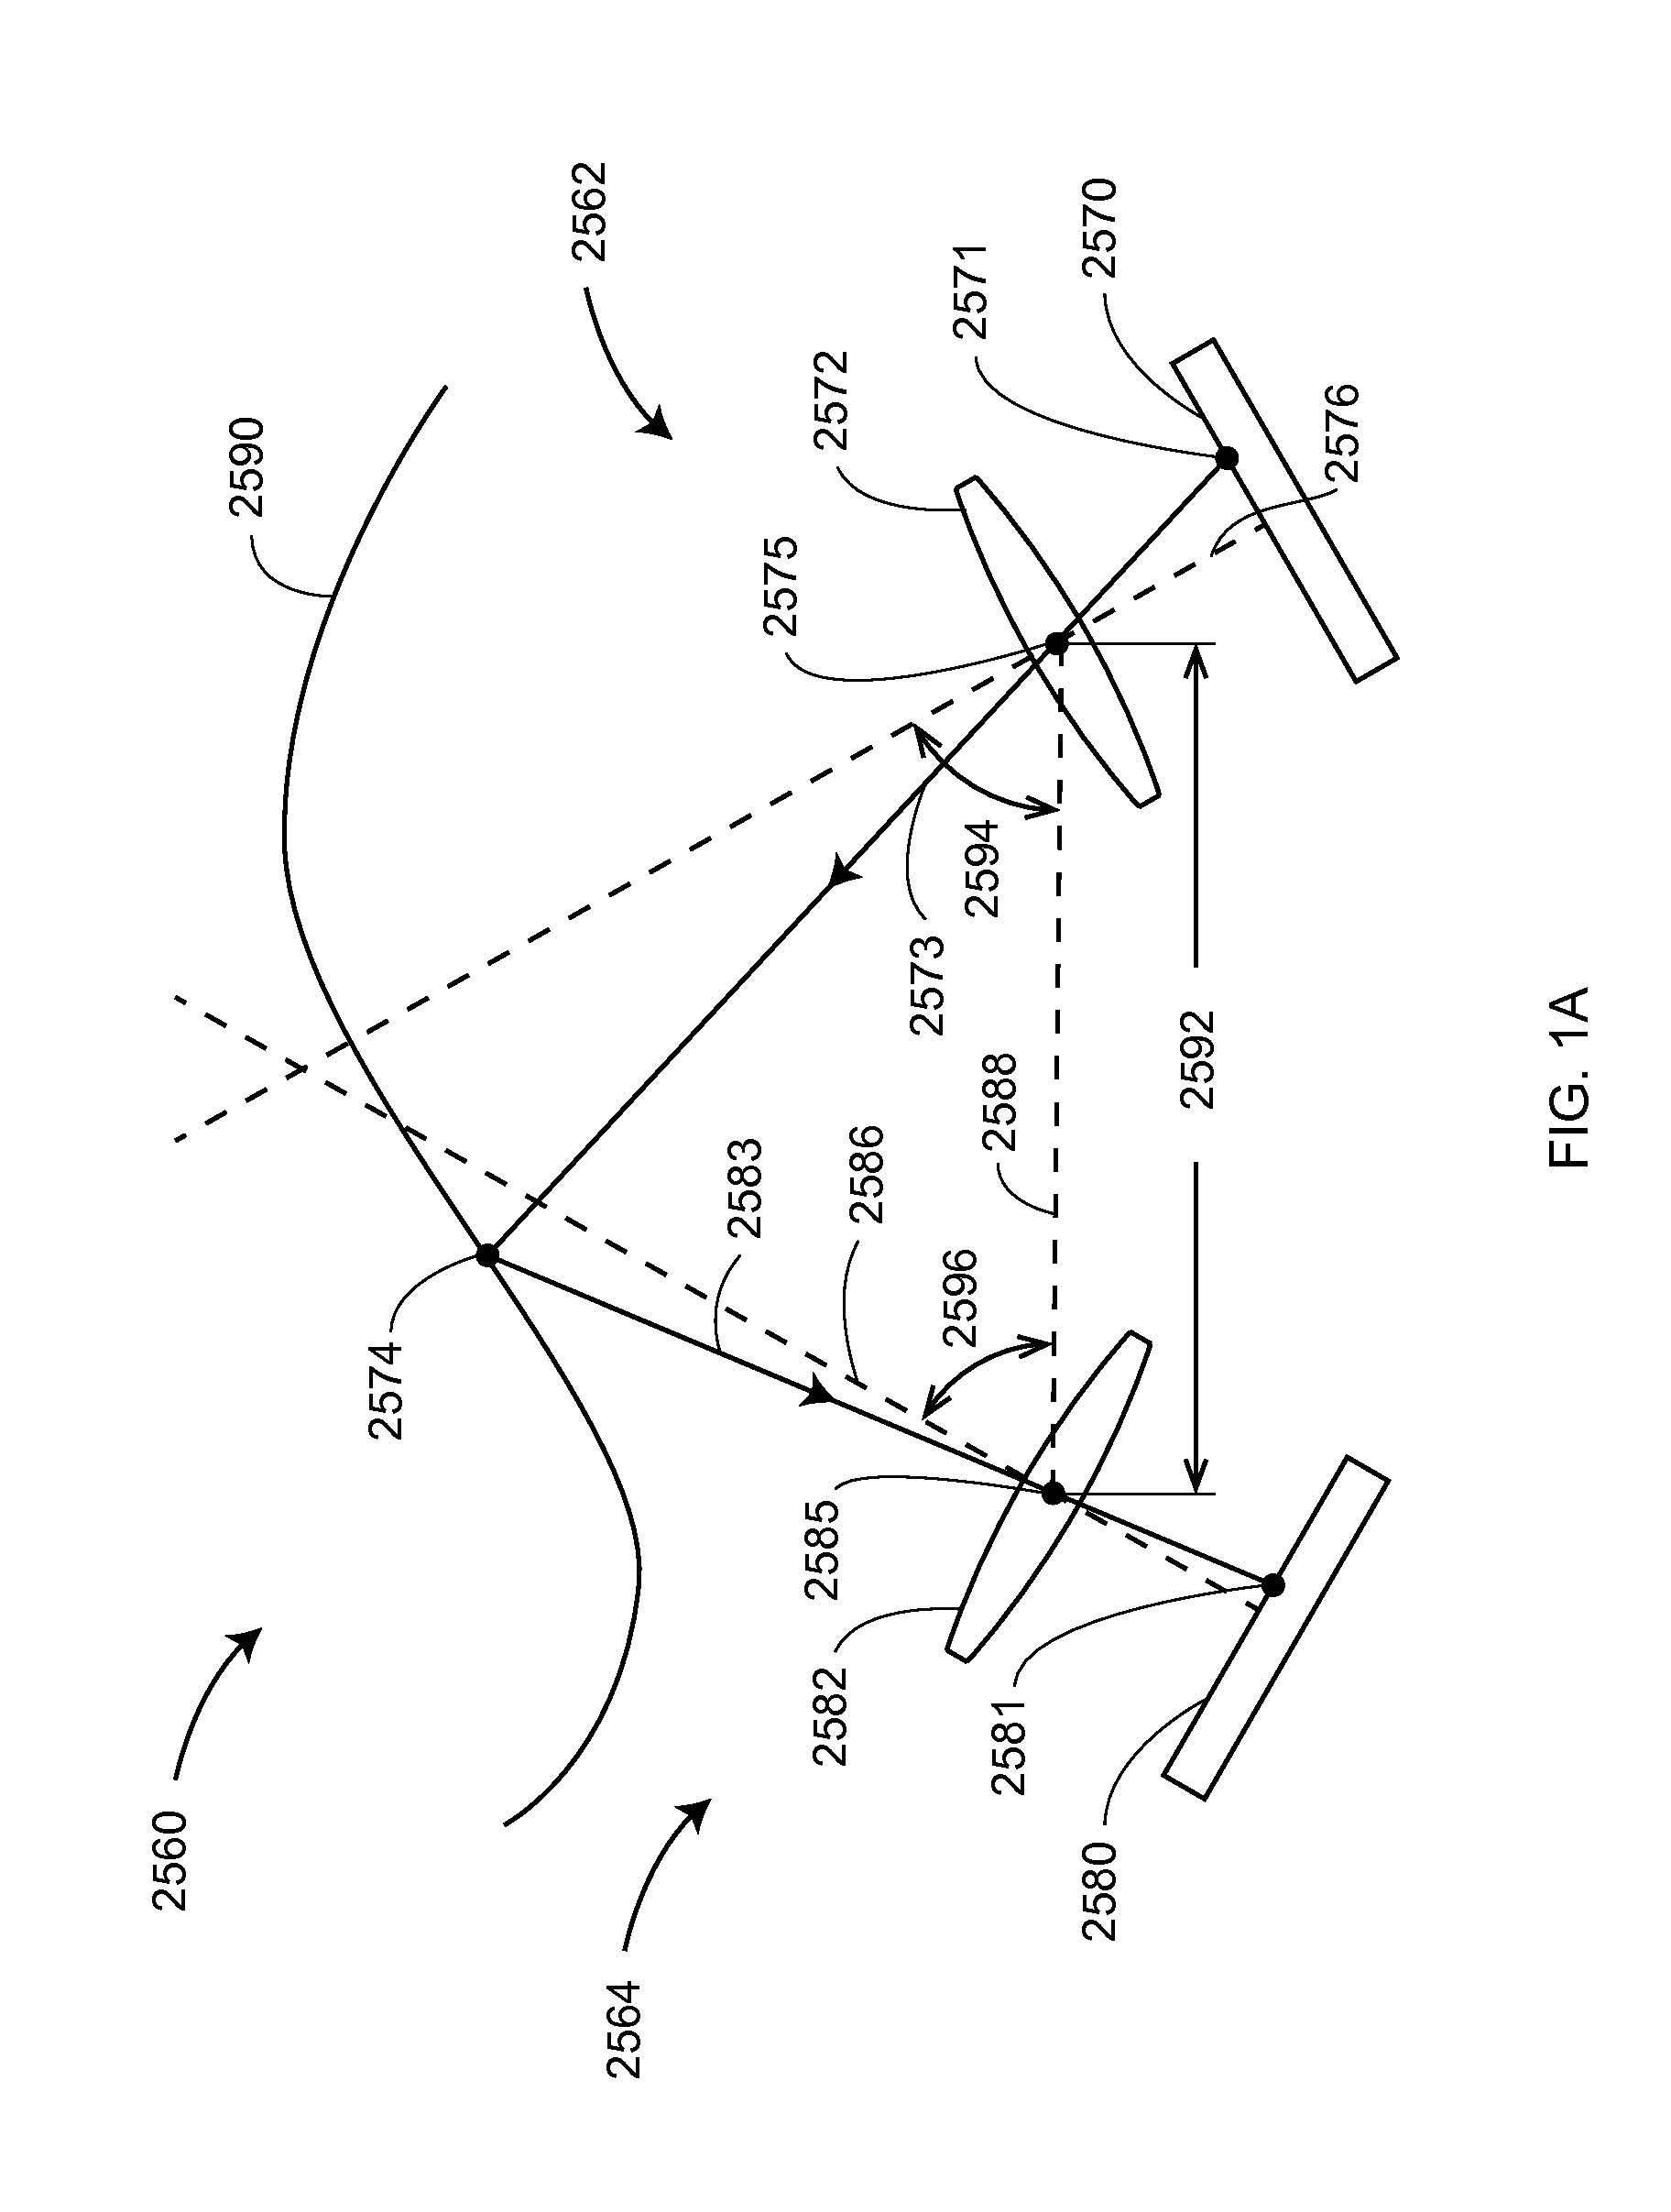 Triangulation scanner having motorized elements